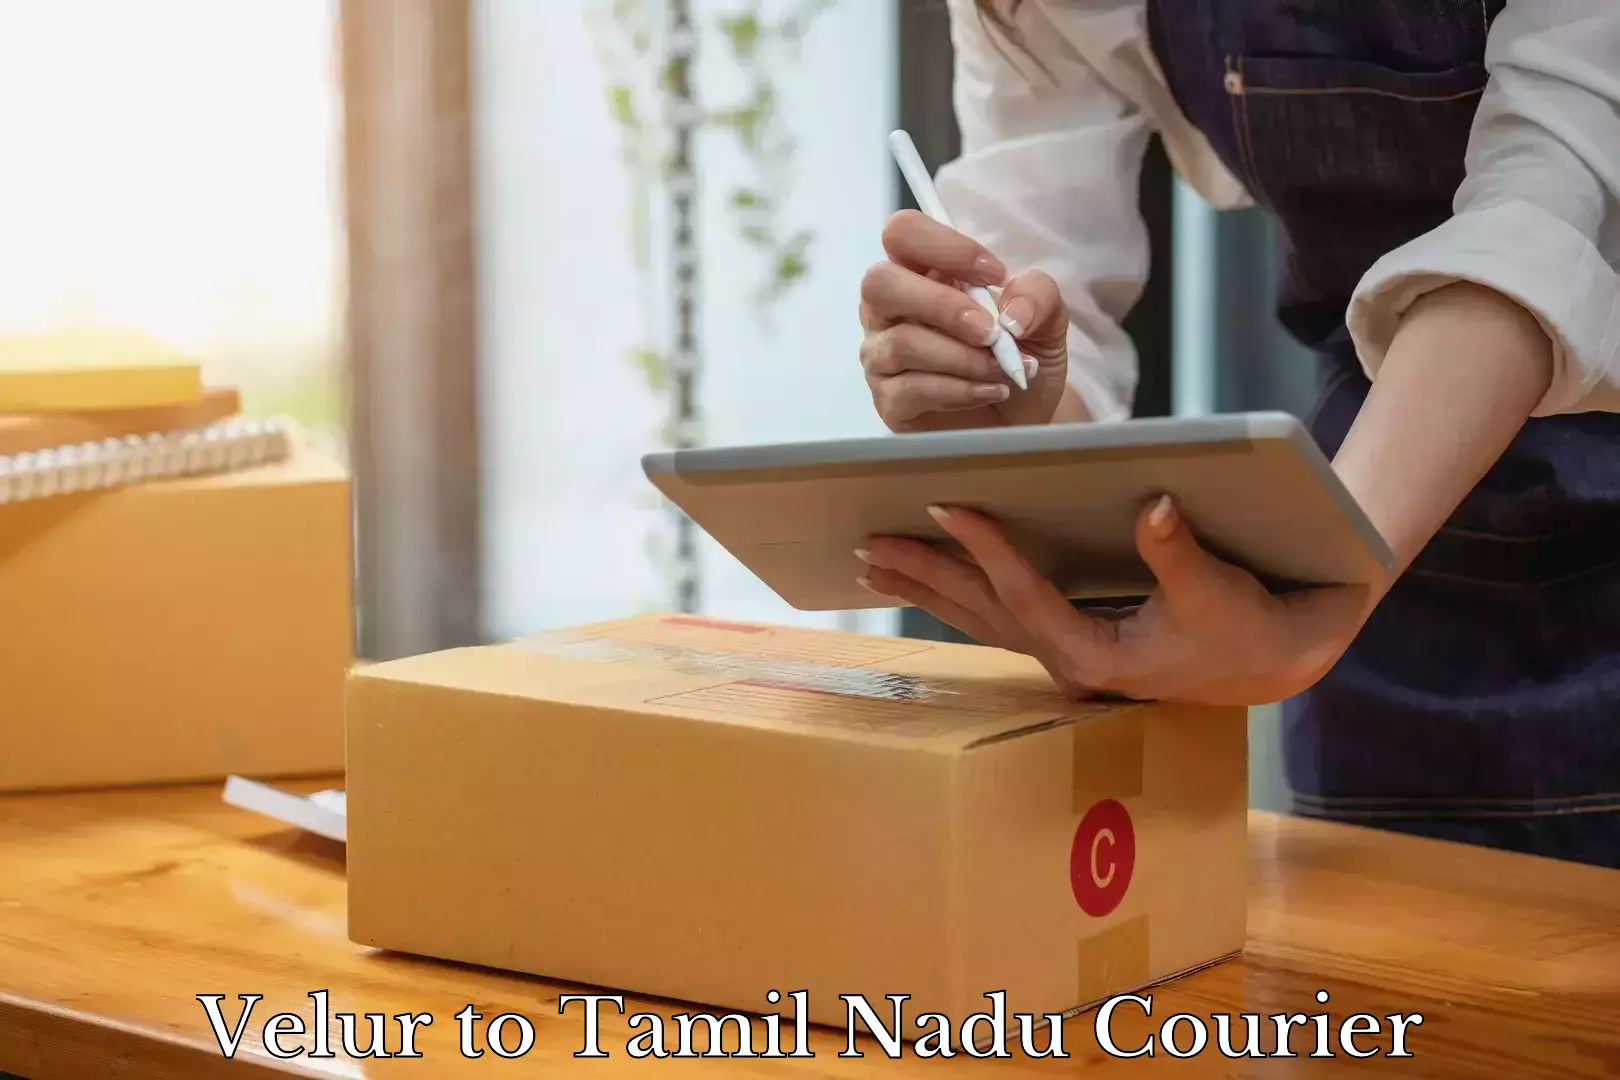 Luggage delivery app Velur to Tamil Nadu